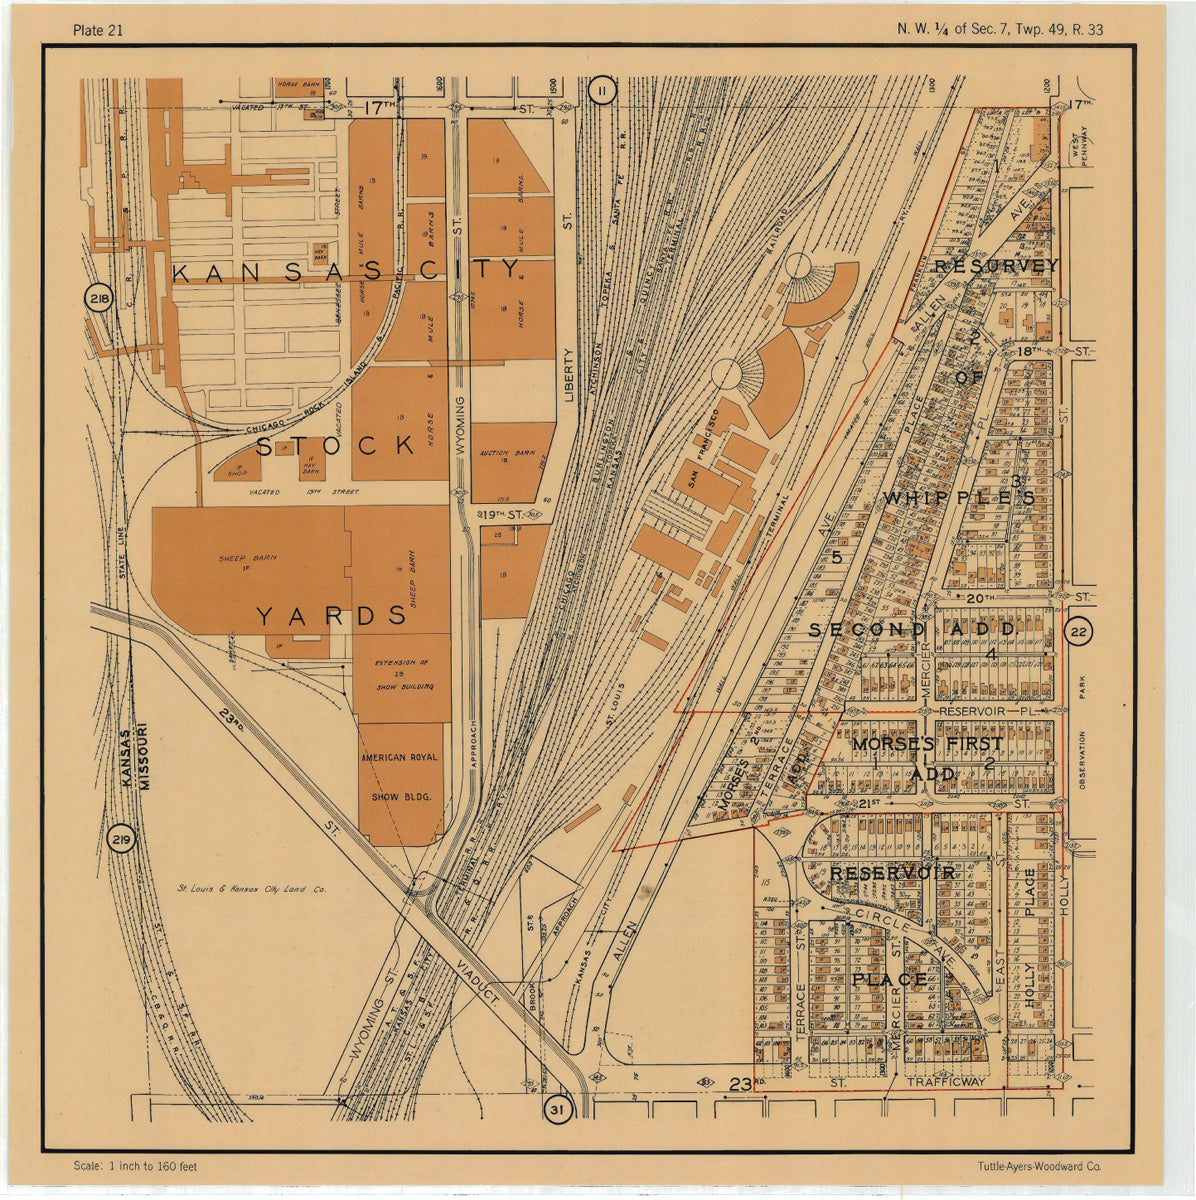 Kansas City 1925 Neighborhood Map - Plate #21 17th-23rd State Line-Holly